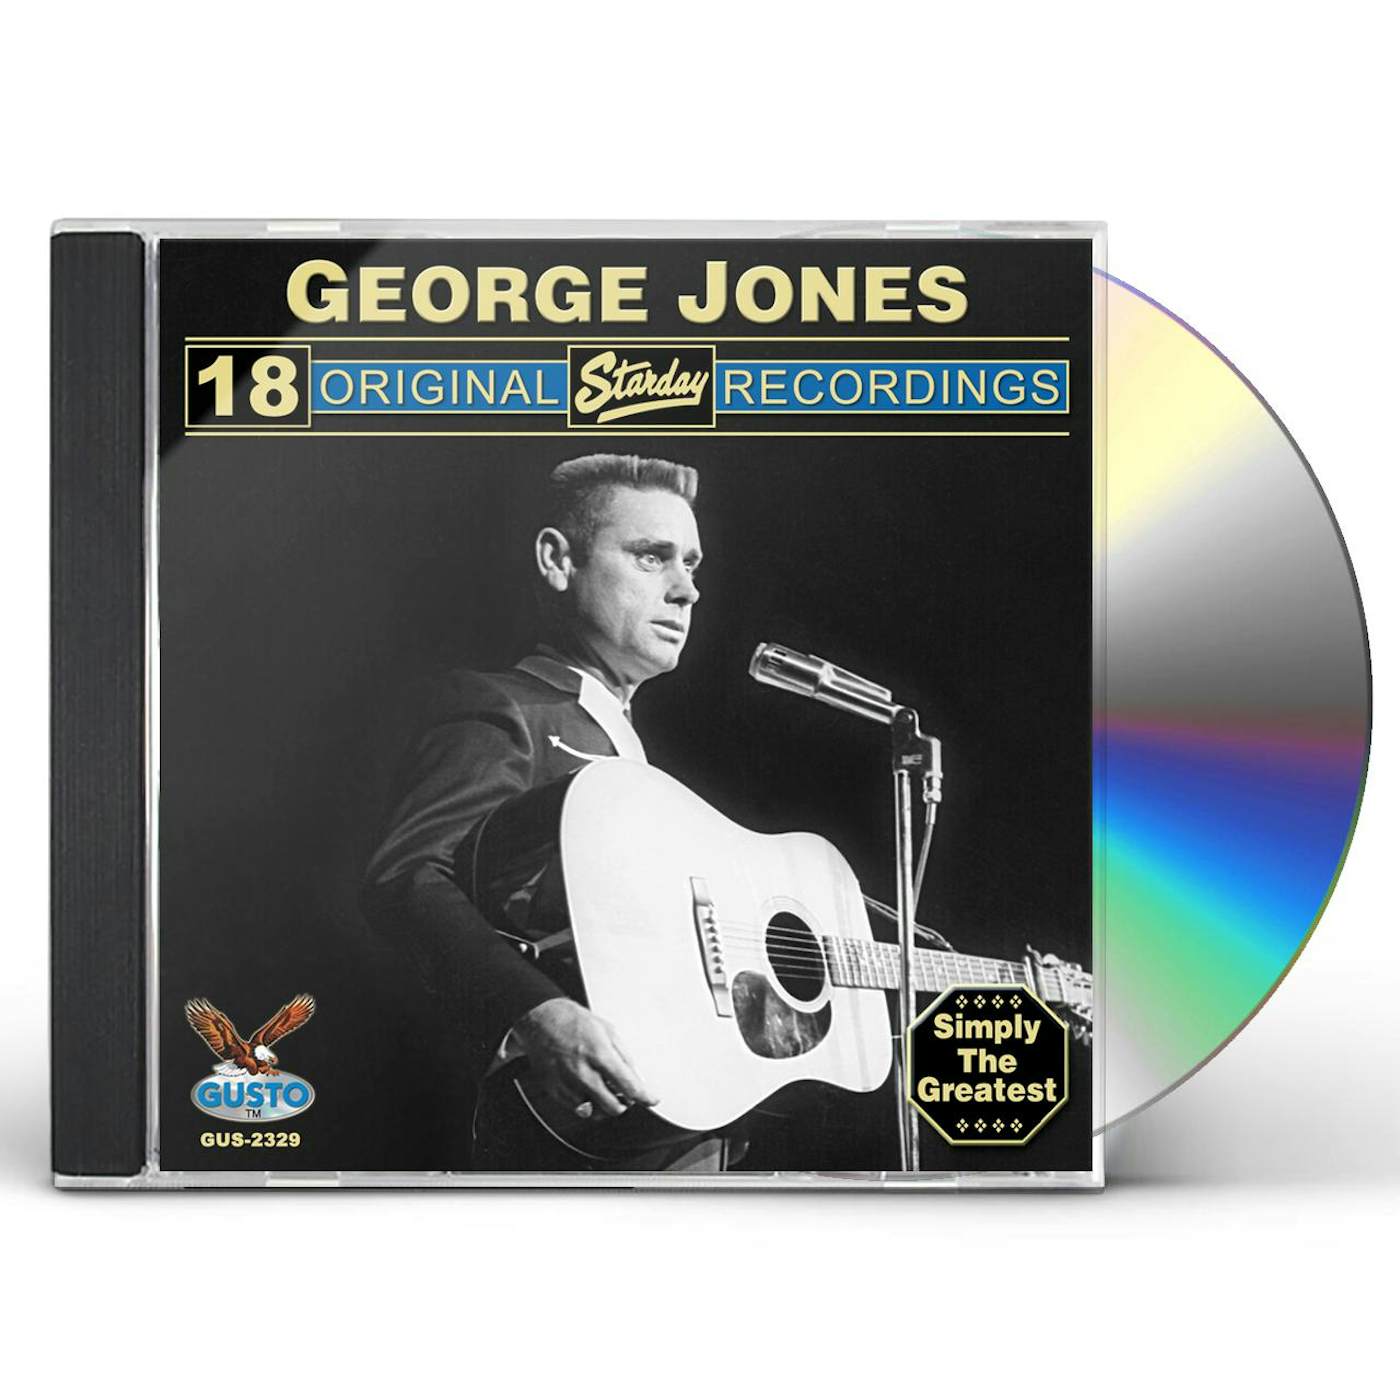 George Jones 18 ORIGINAL STARDAY RECORDINGS CD